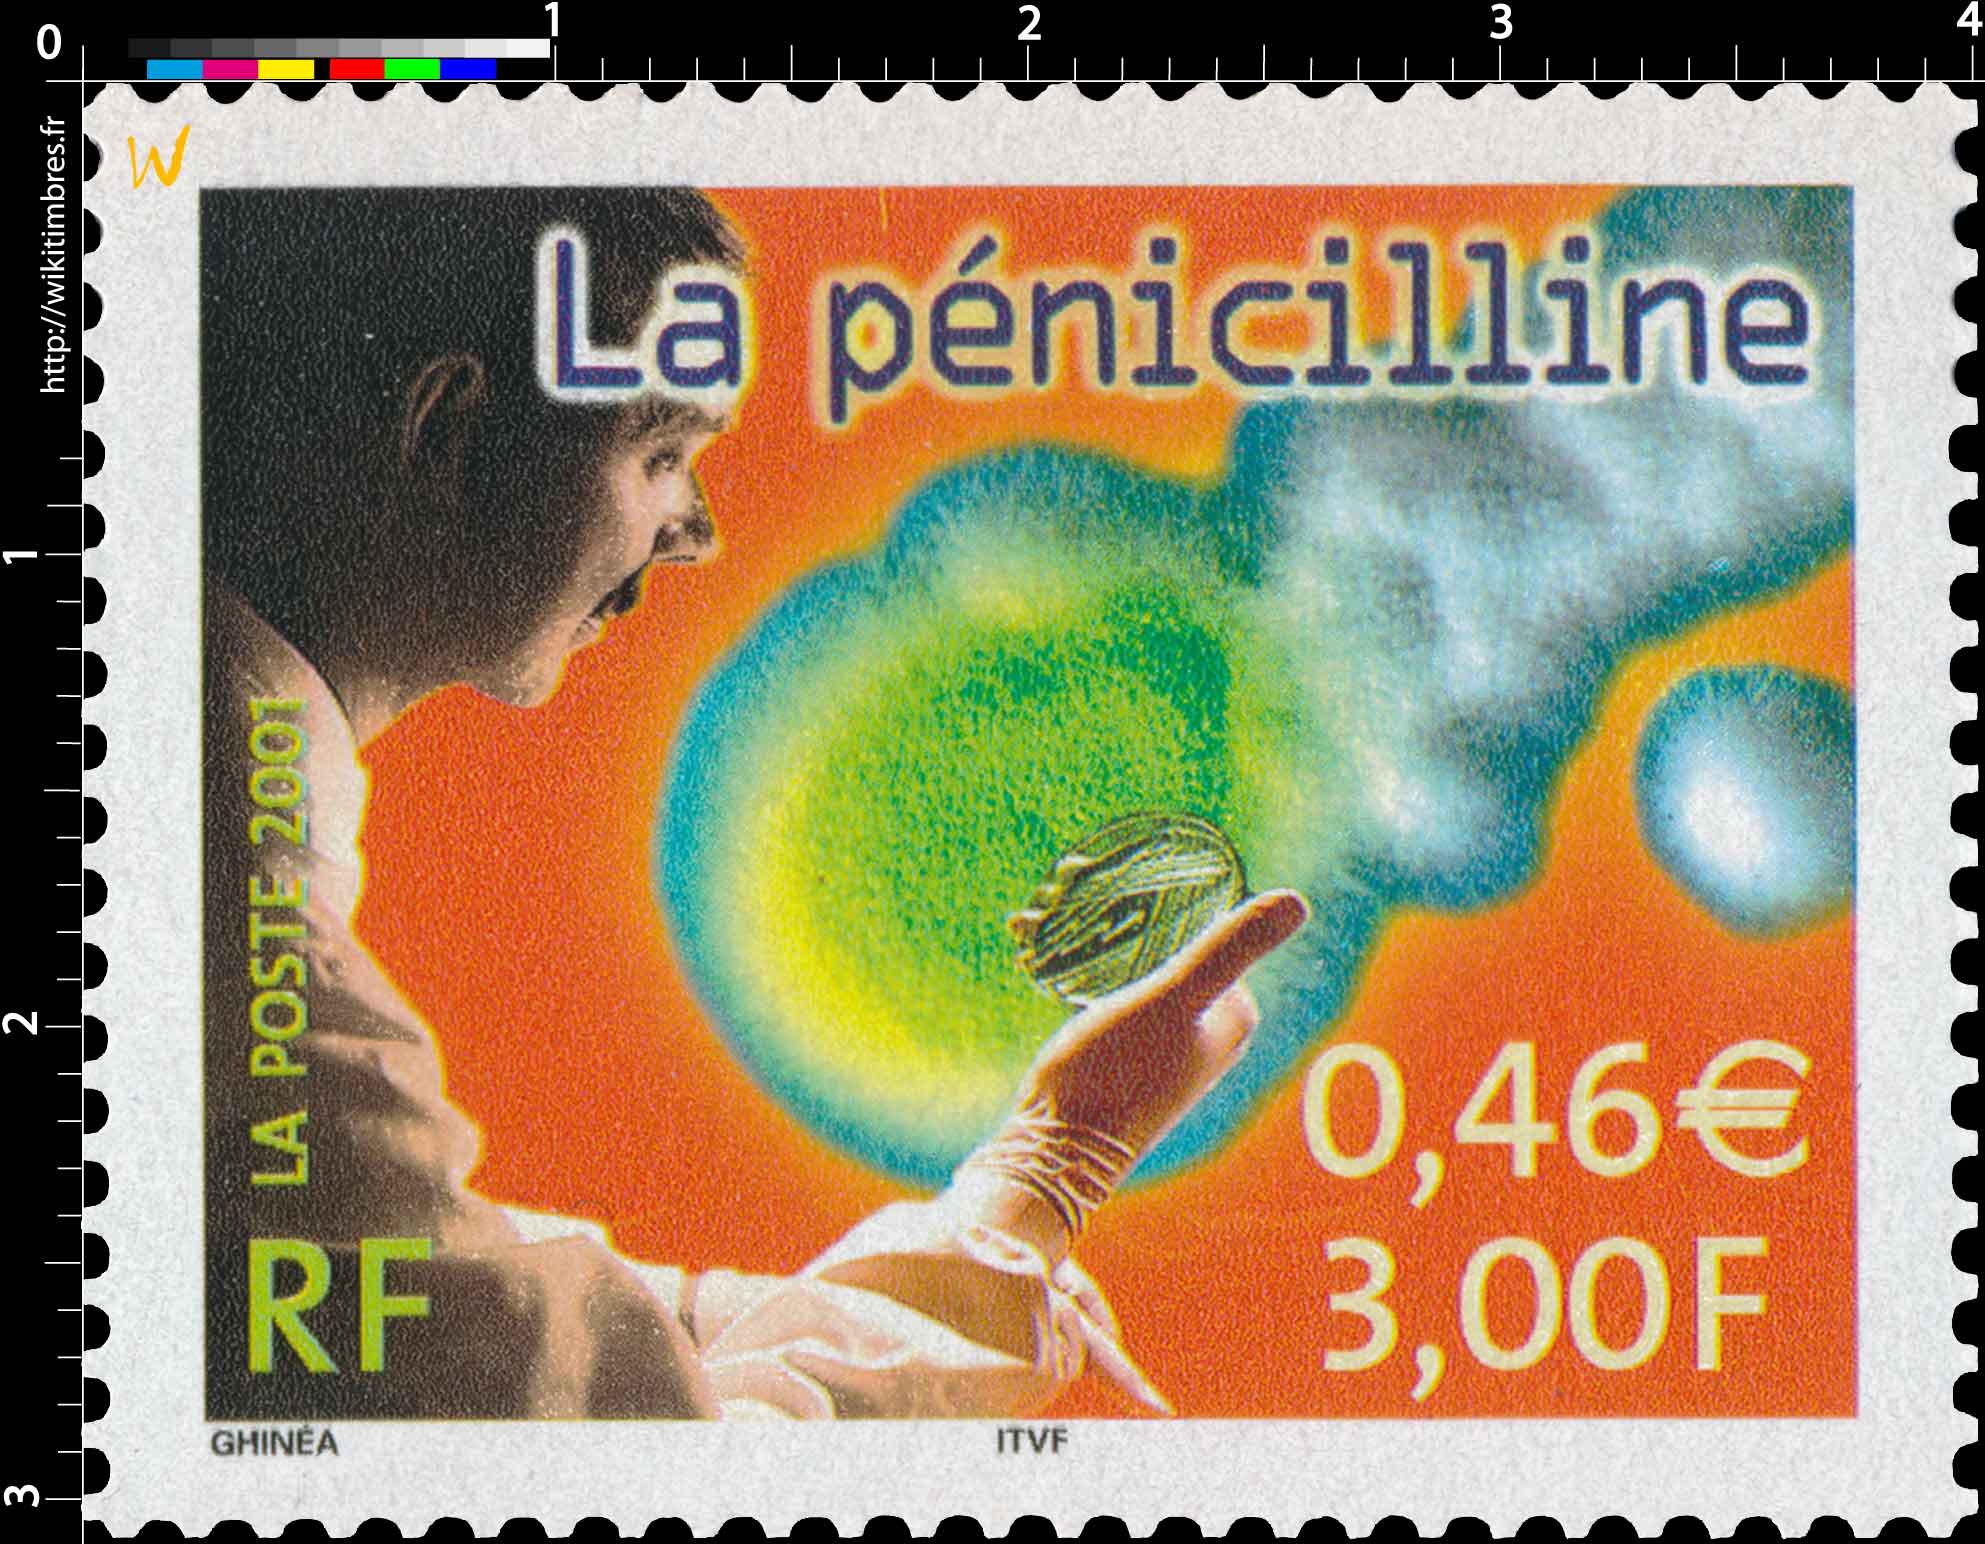 2001 La pénicilline